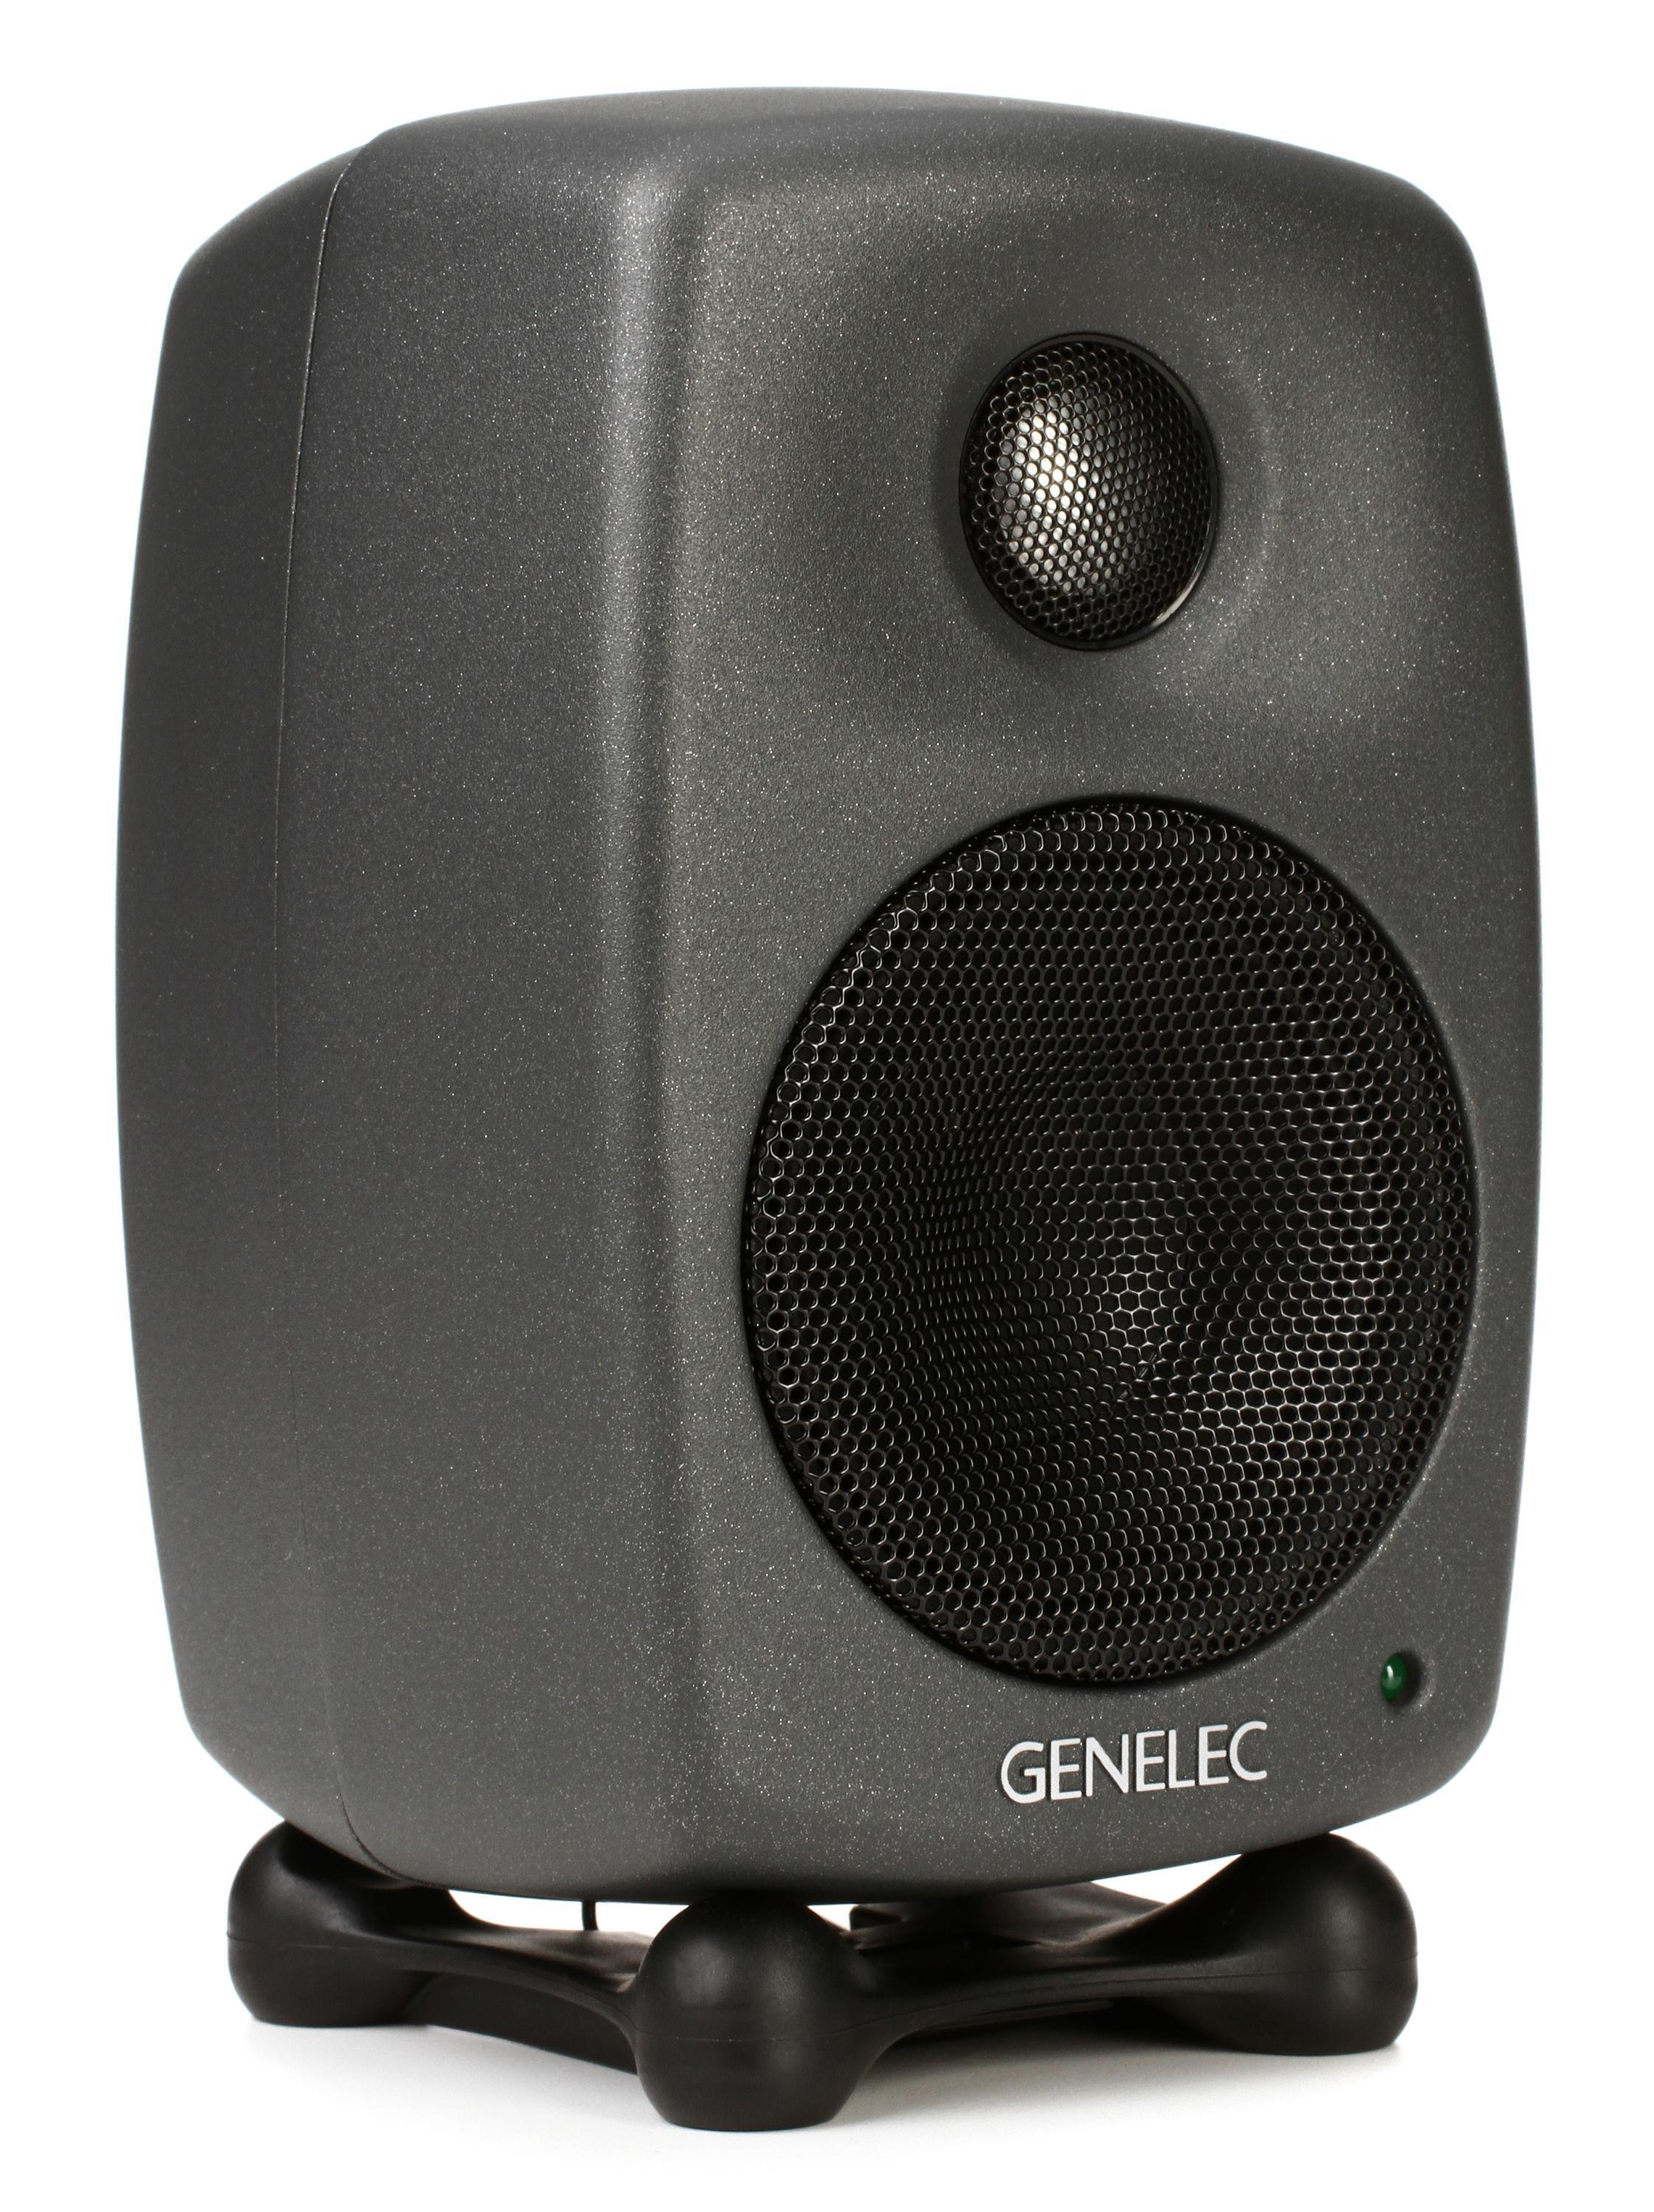 Bundled Item: Genelec 8010A 3 inch Powered Studio Monitor